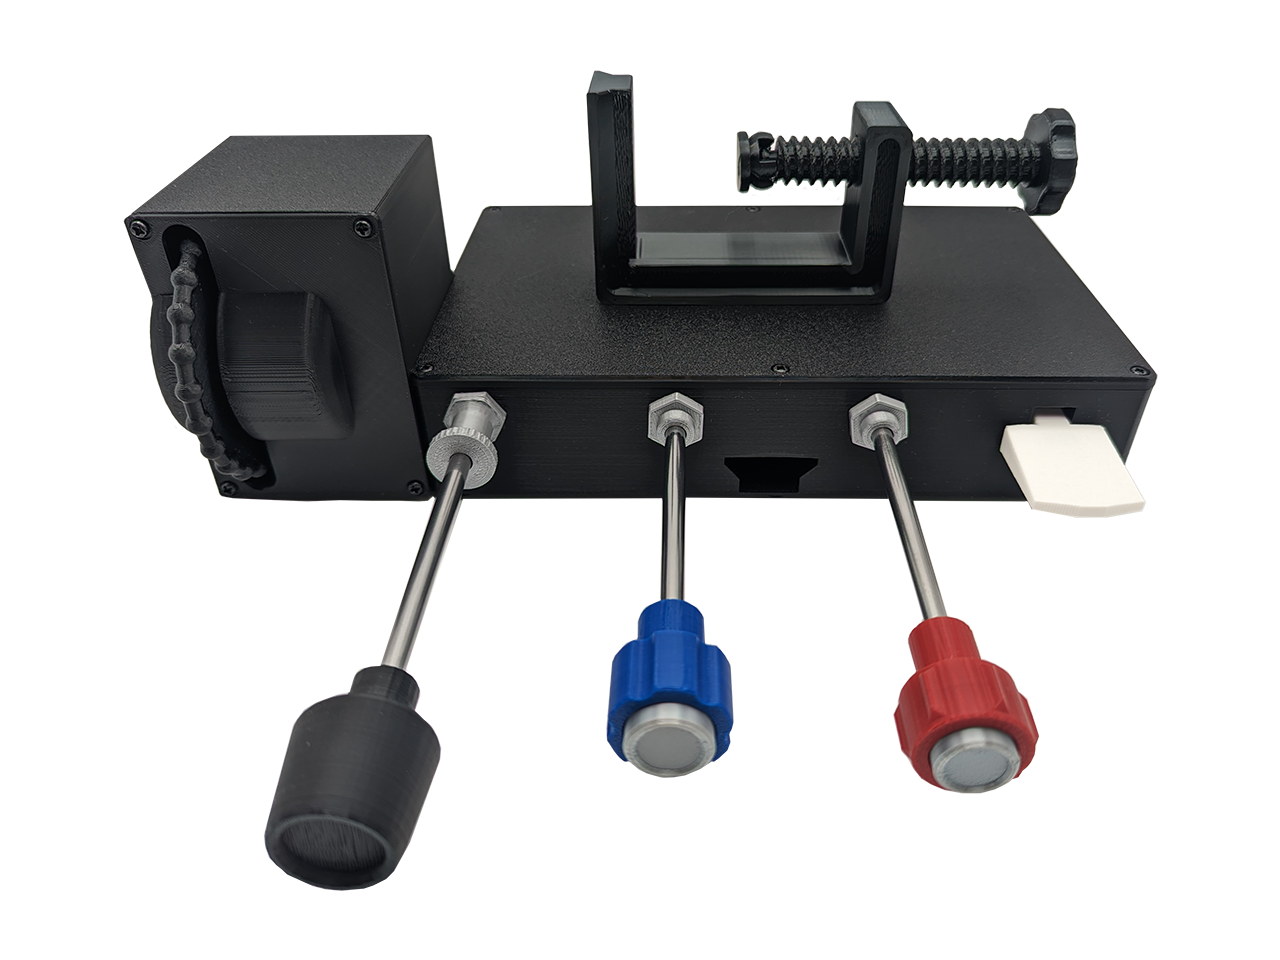 Throttle, Propeller, Mixture, (TPM) Flaps and Trim Controller For Flight Simulators - Removable Desktop Mount